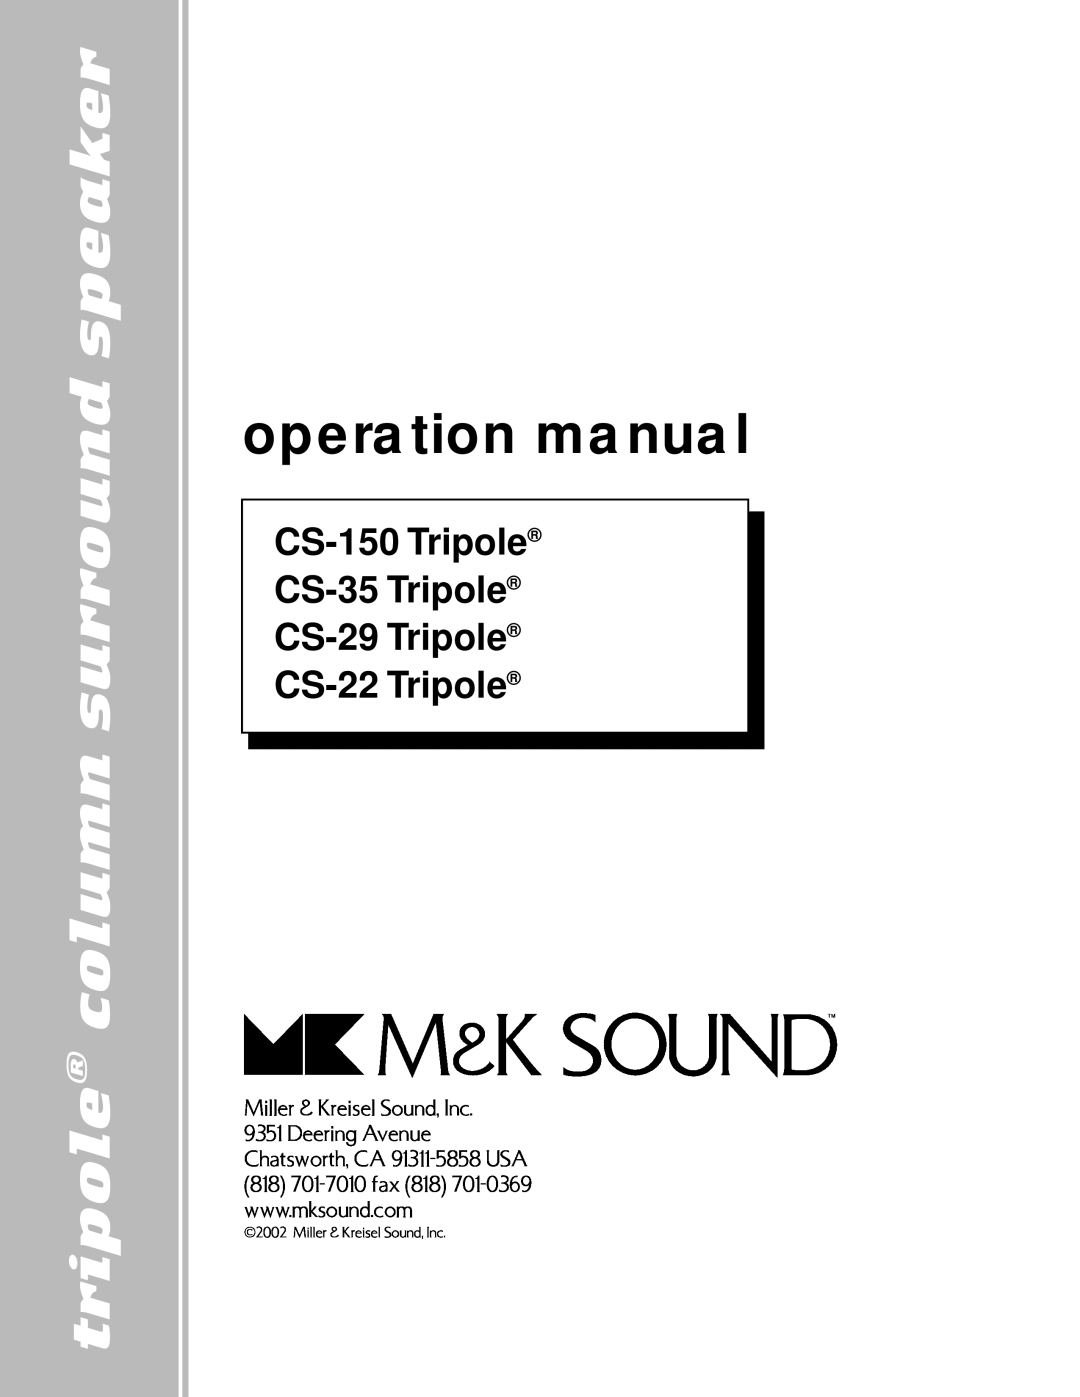 MK Sound operation manual tripole column surround speaker, CS-150Tripole CS-35Tripole CS-29Tripole, CS-22Tripole 